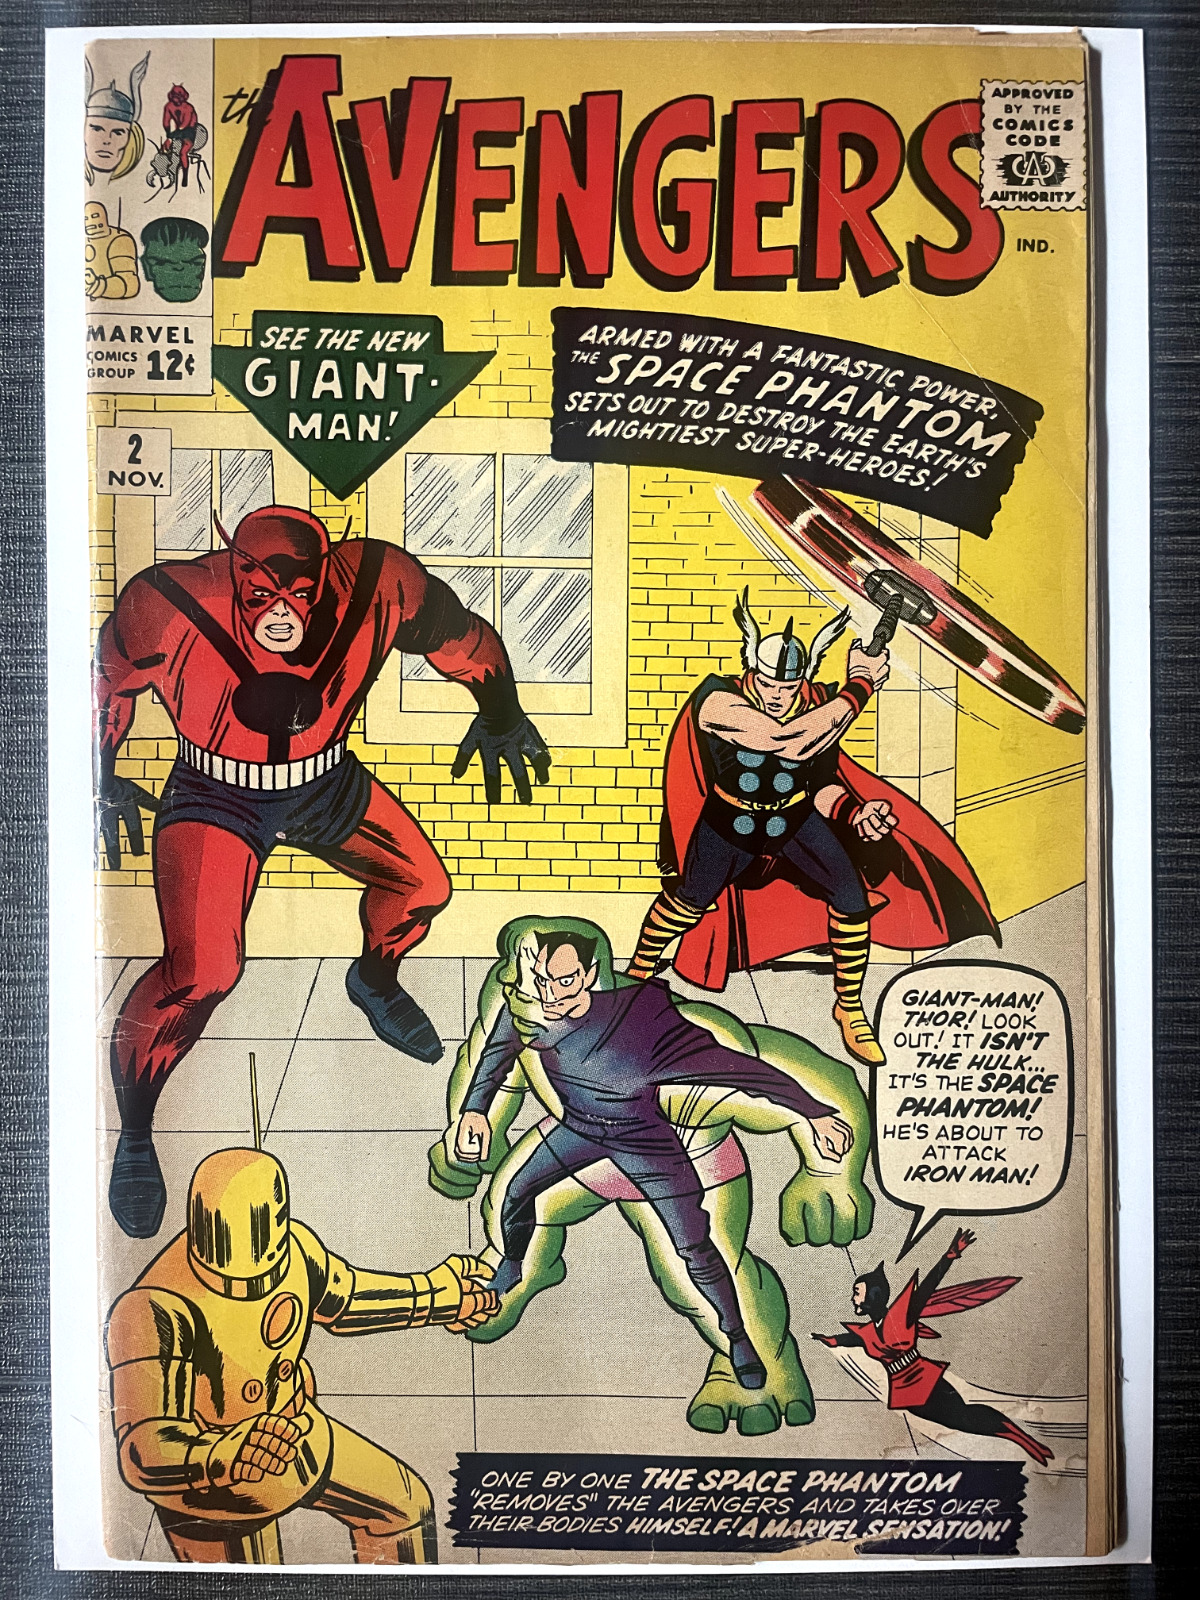 Avengers #2 (1963) Silver Age Marvel Comic Book 2nd app KEY Stan Lee Jack Kirby